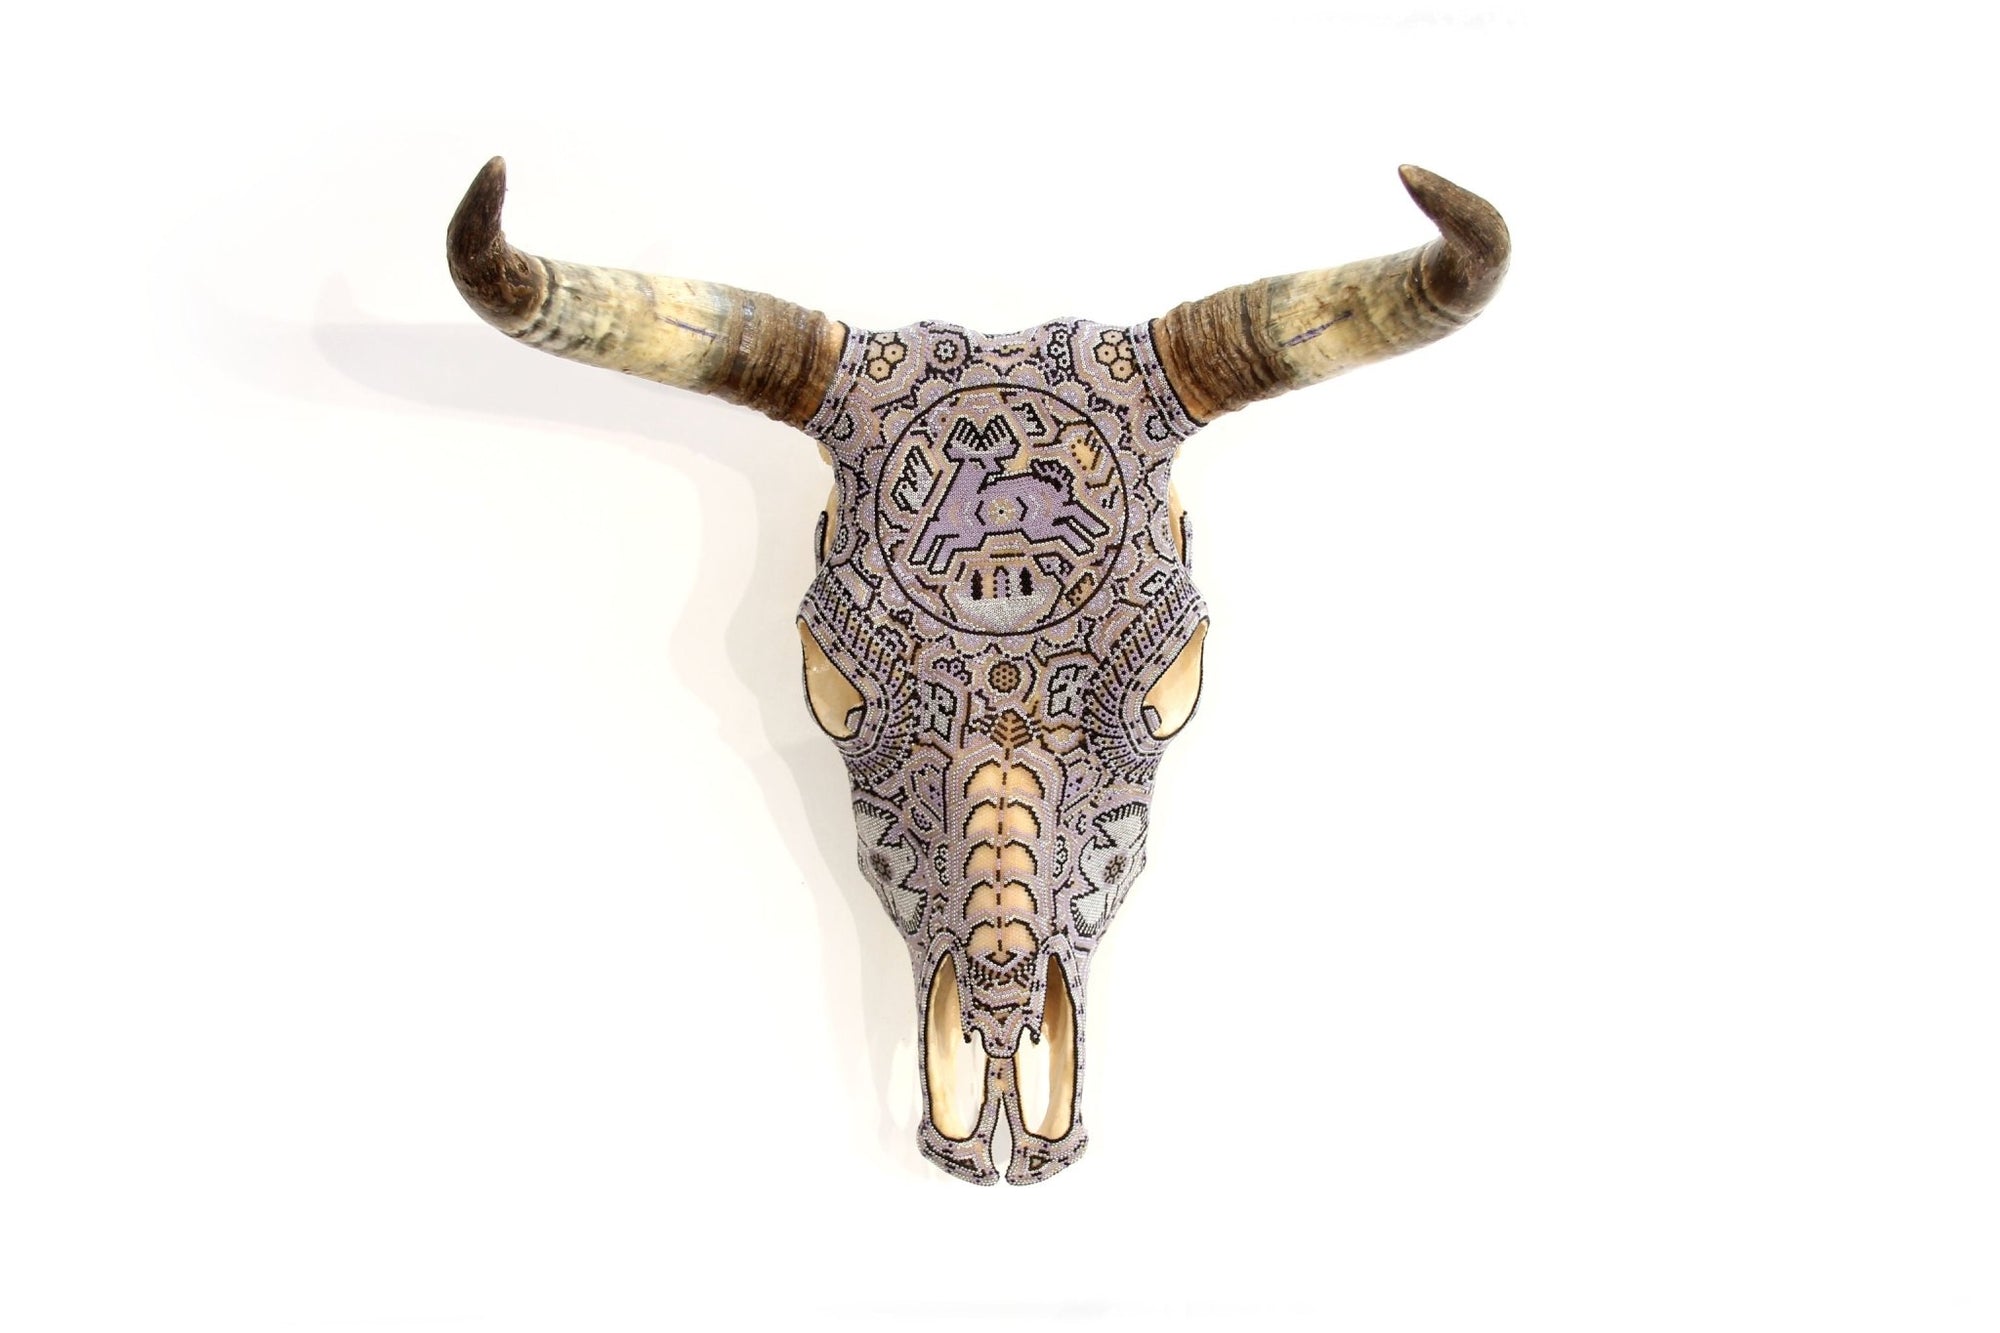 Cráneo de vaca Arte Huichol - Tamatsi Kauyumari - Arte Huichol - Marakame